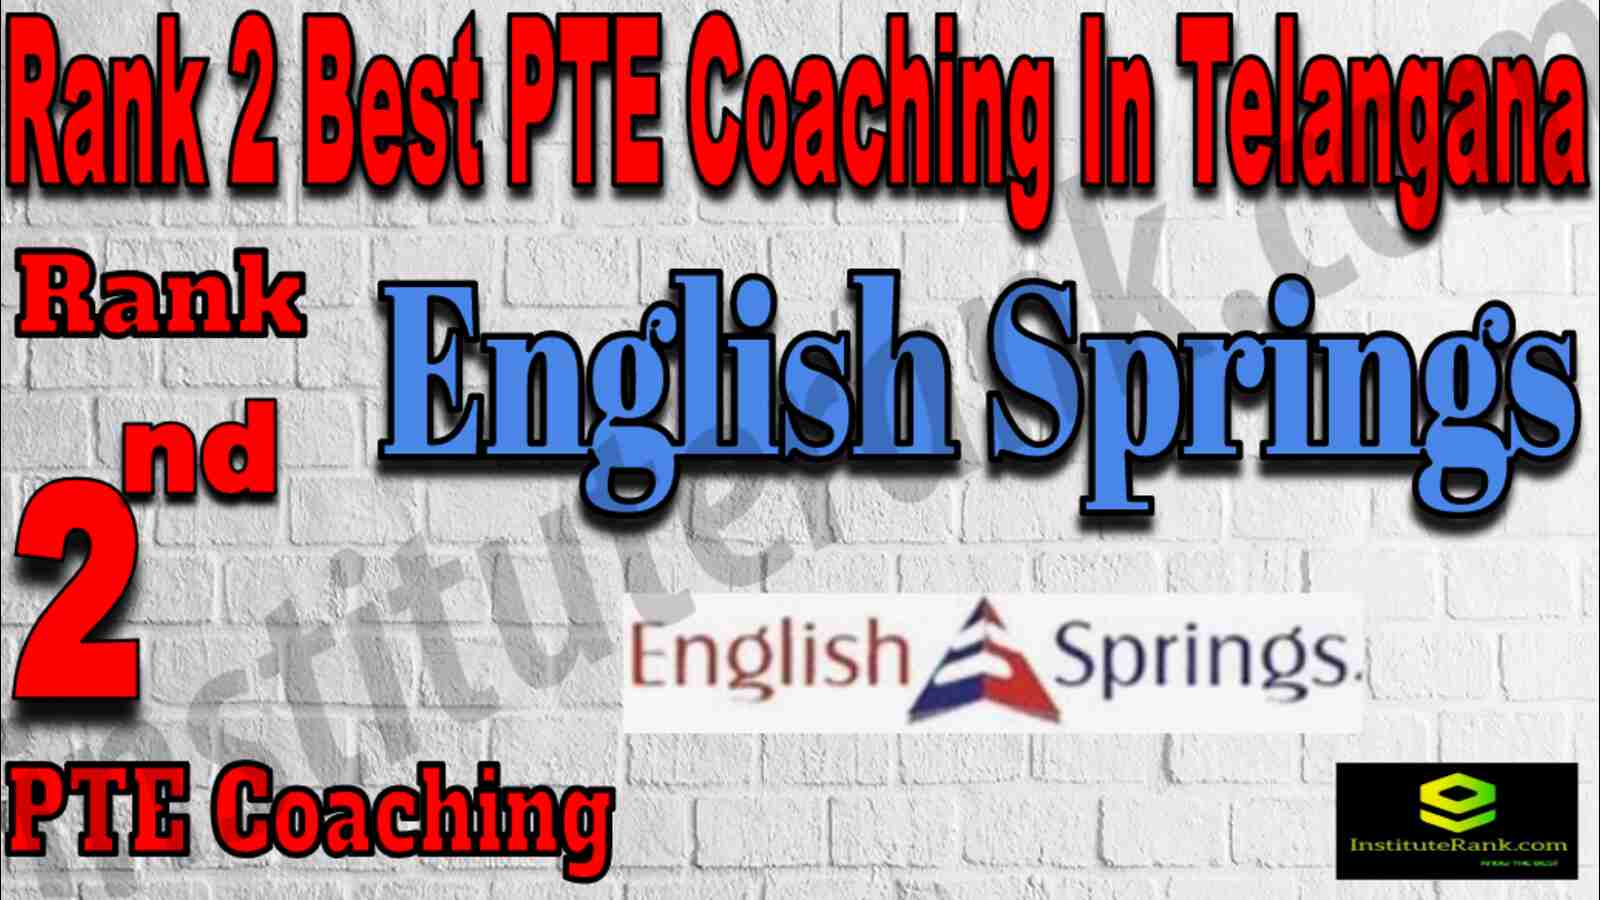 2nd Best PTE Coaching In Telangana